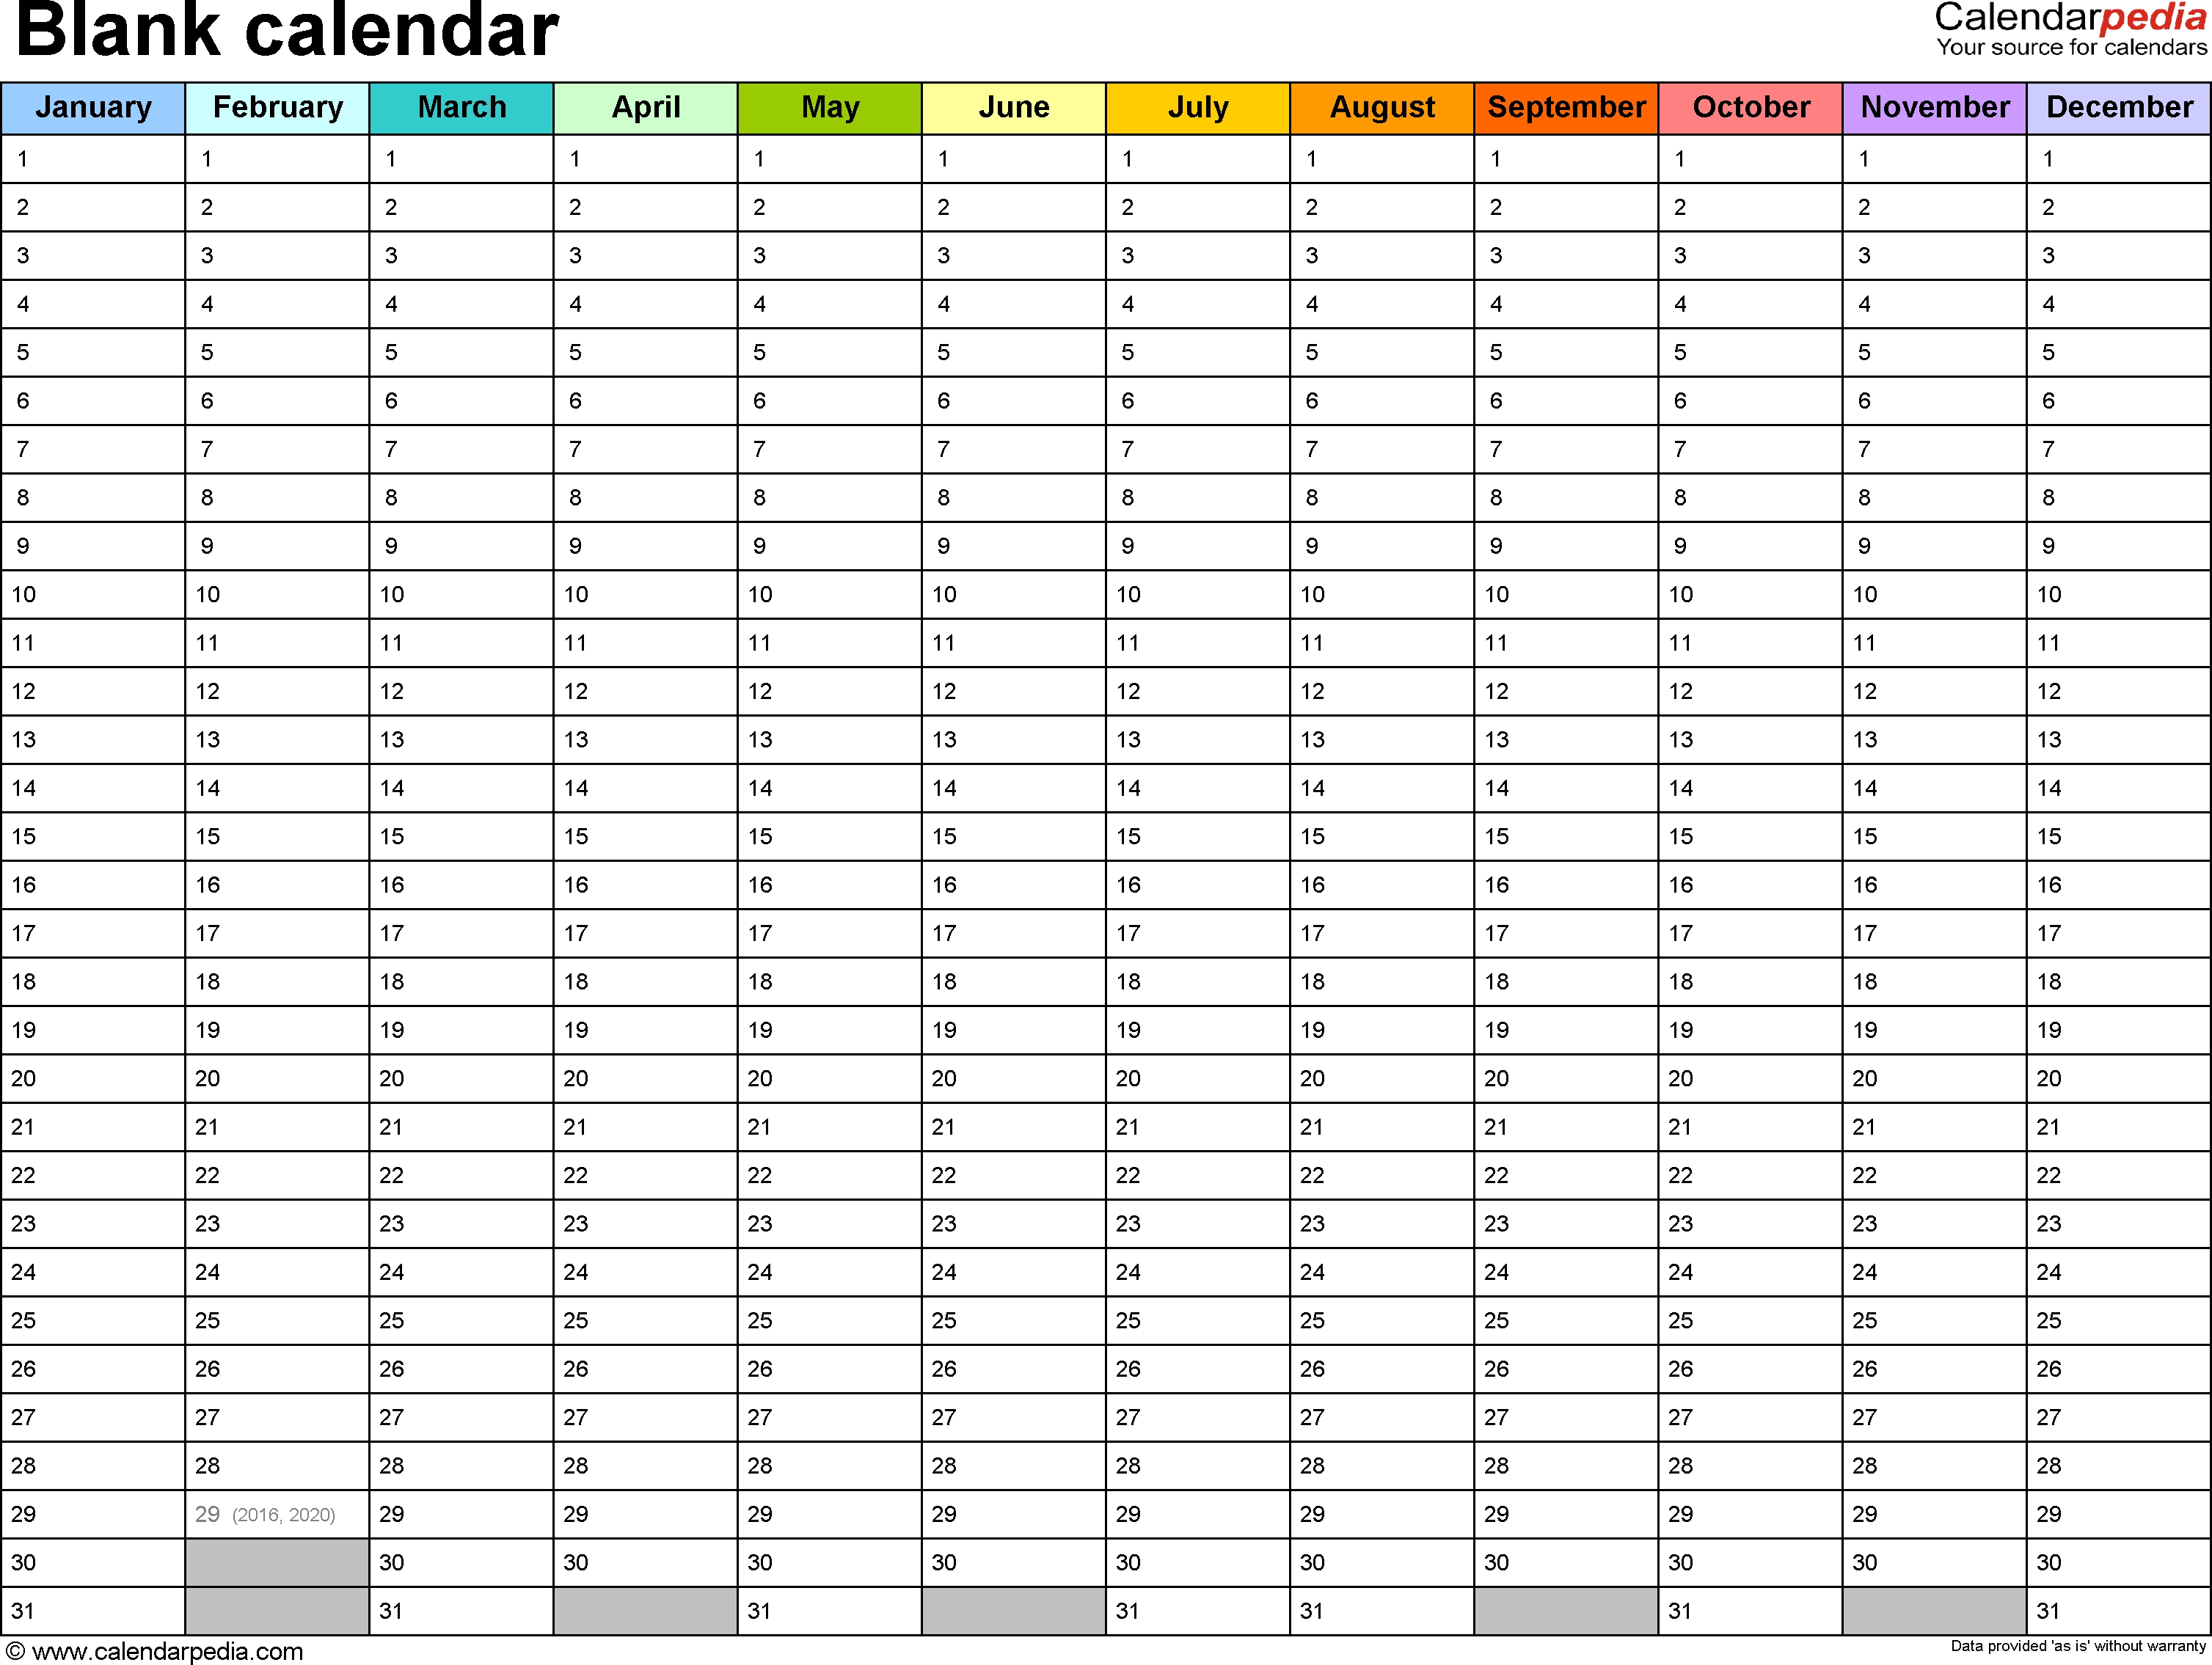 Blank Calendar - 9 Free Printable Microsoft Word Templates intended for Printable 3 Month Calendar Template